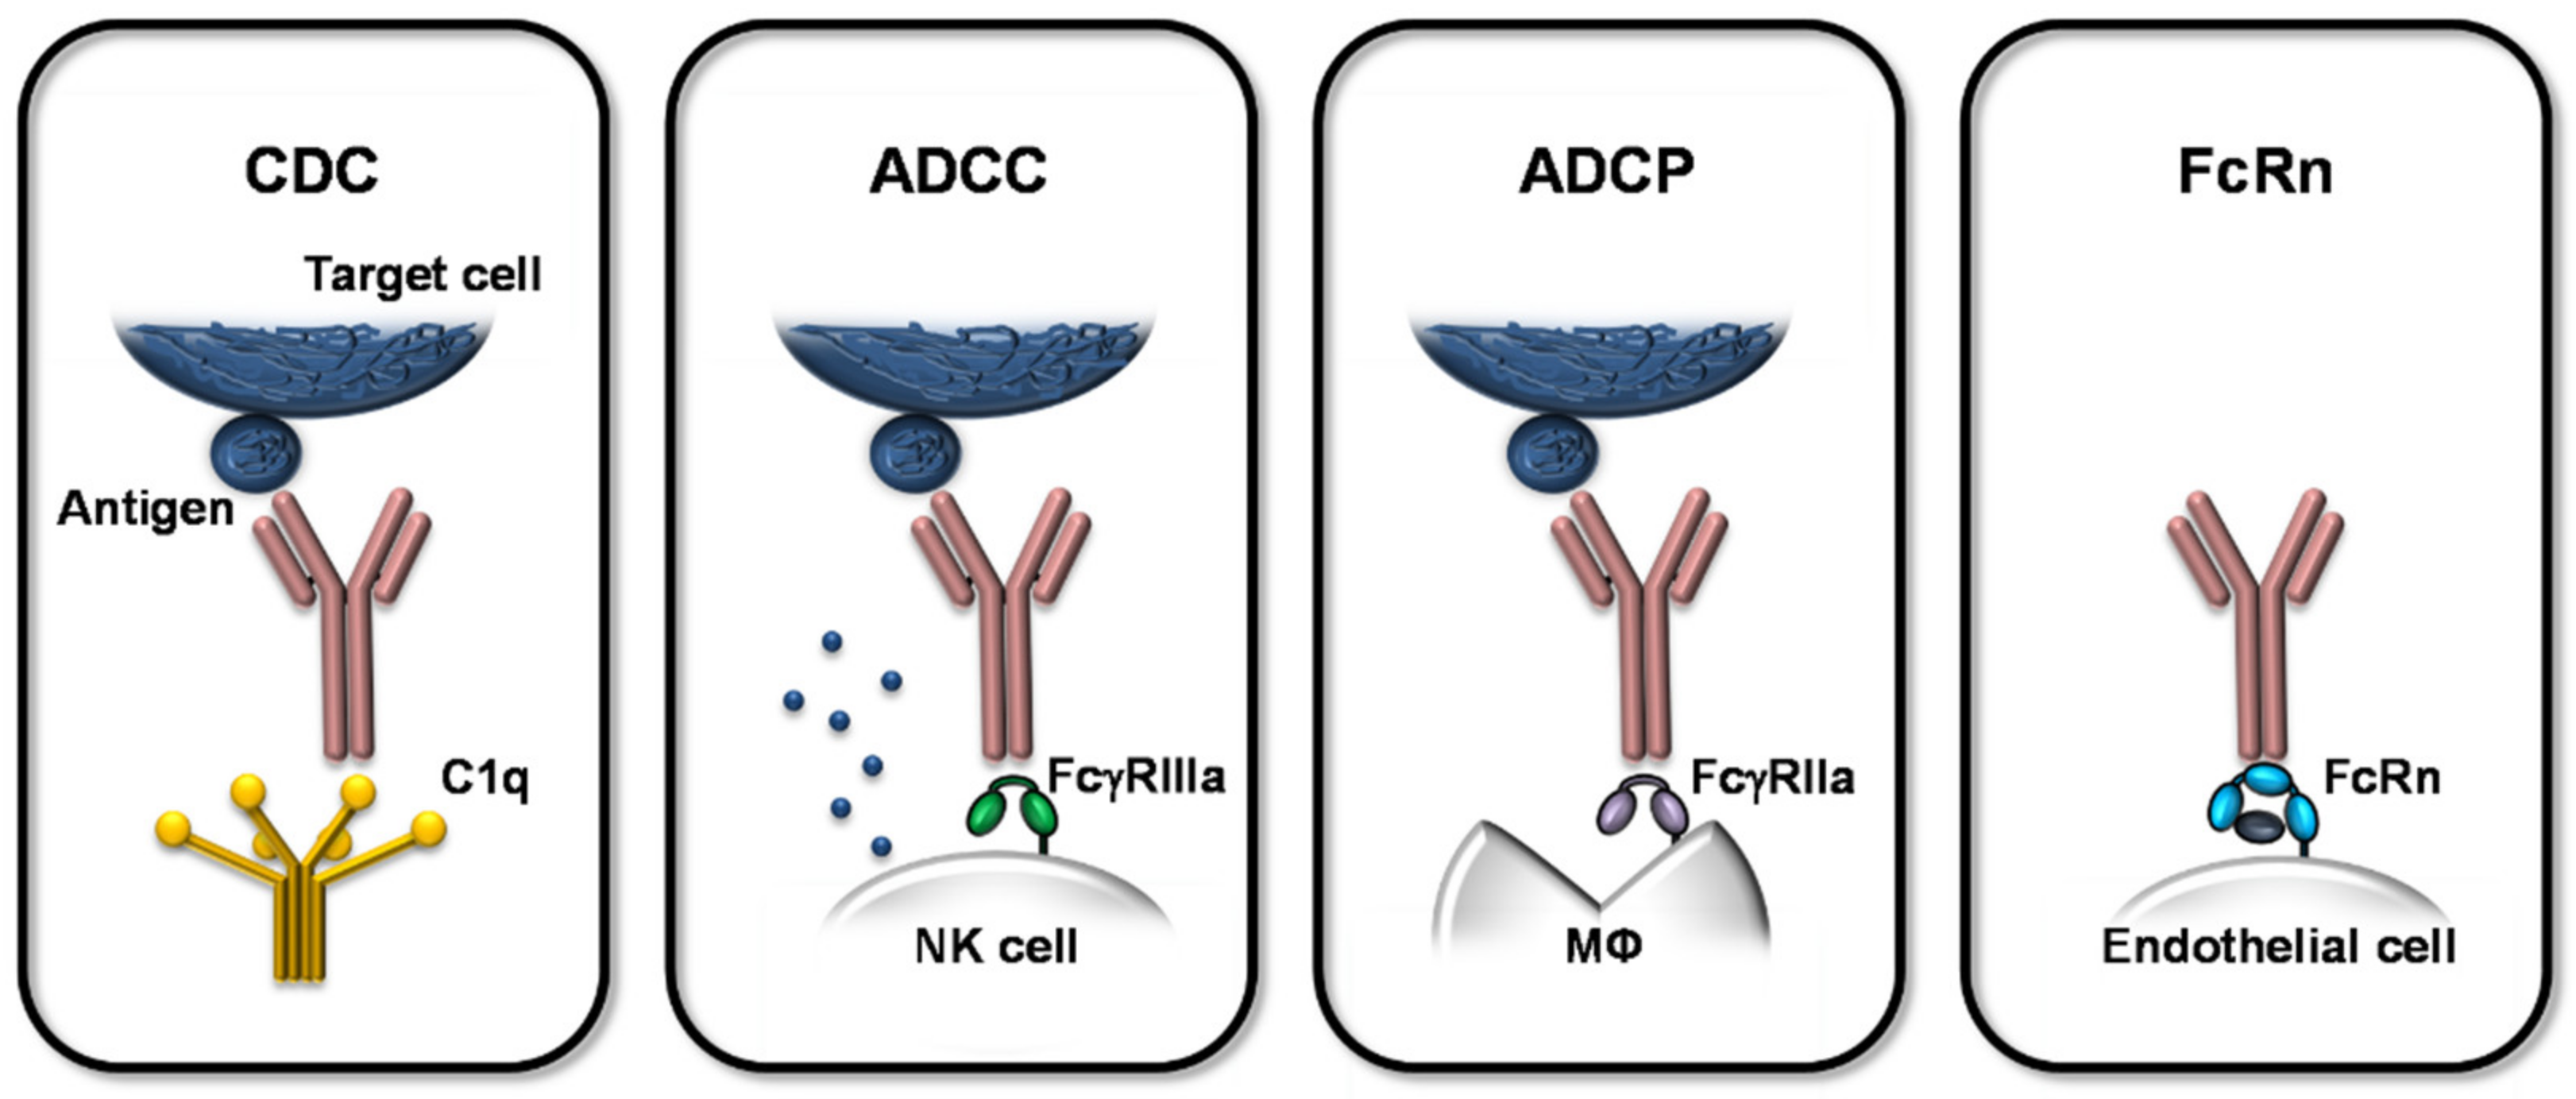 Fc receptor (FcR)-mediated signaling for phagocytosis. Engagement